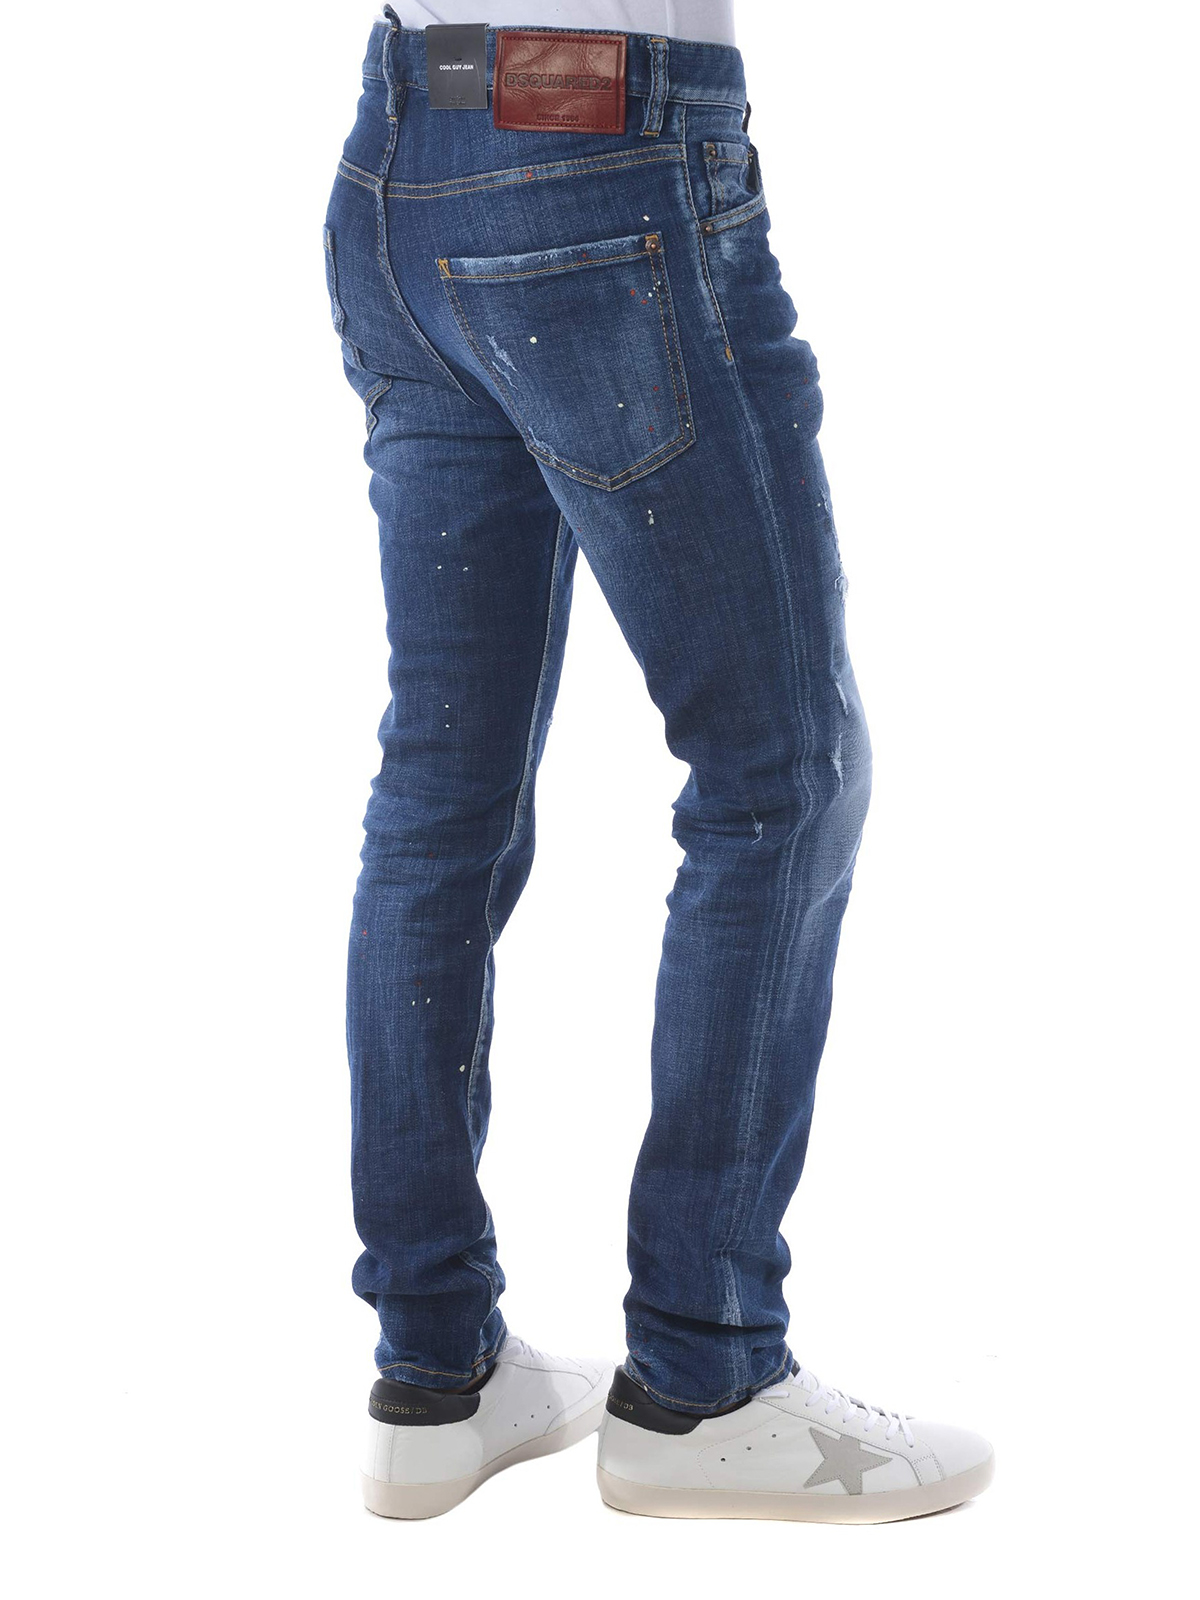 used denim jeans